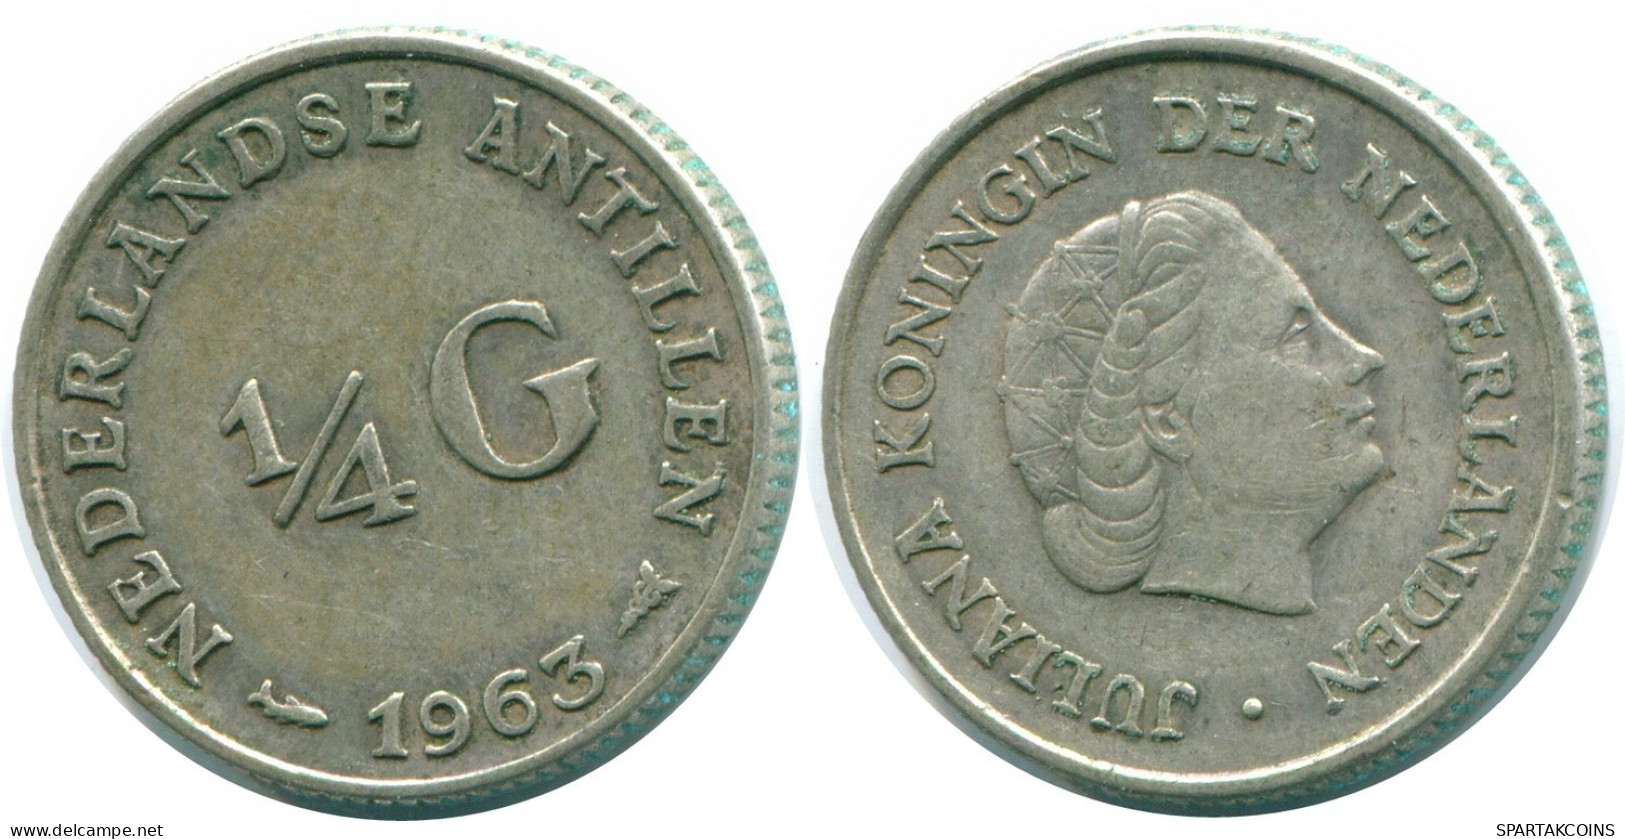 1/4 GULDEN 1963 NETHERLANDS ANTILLES SILVER Colonial Coin #NL11224.4.U.A - Niederländische Antillen